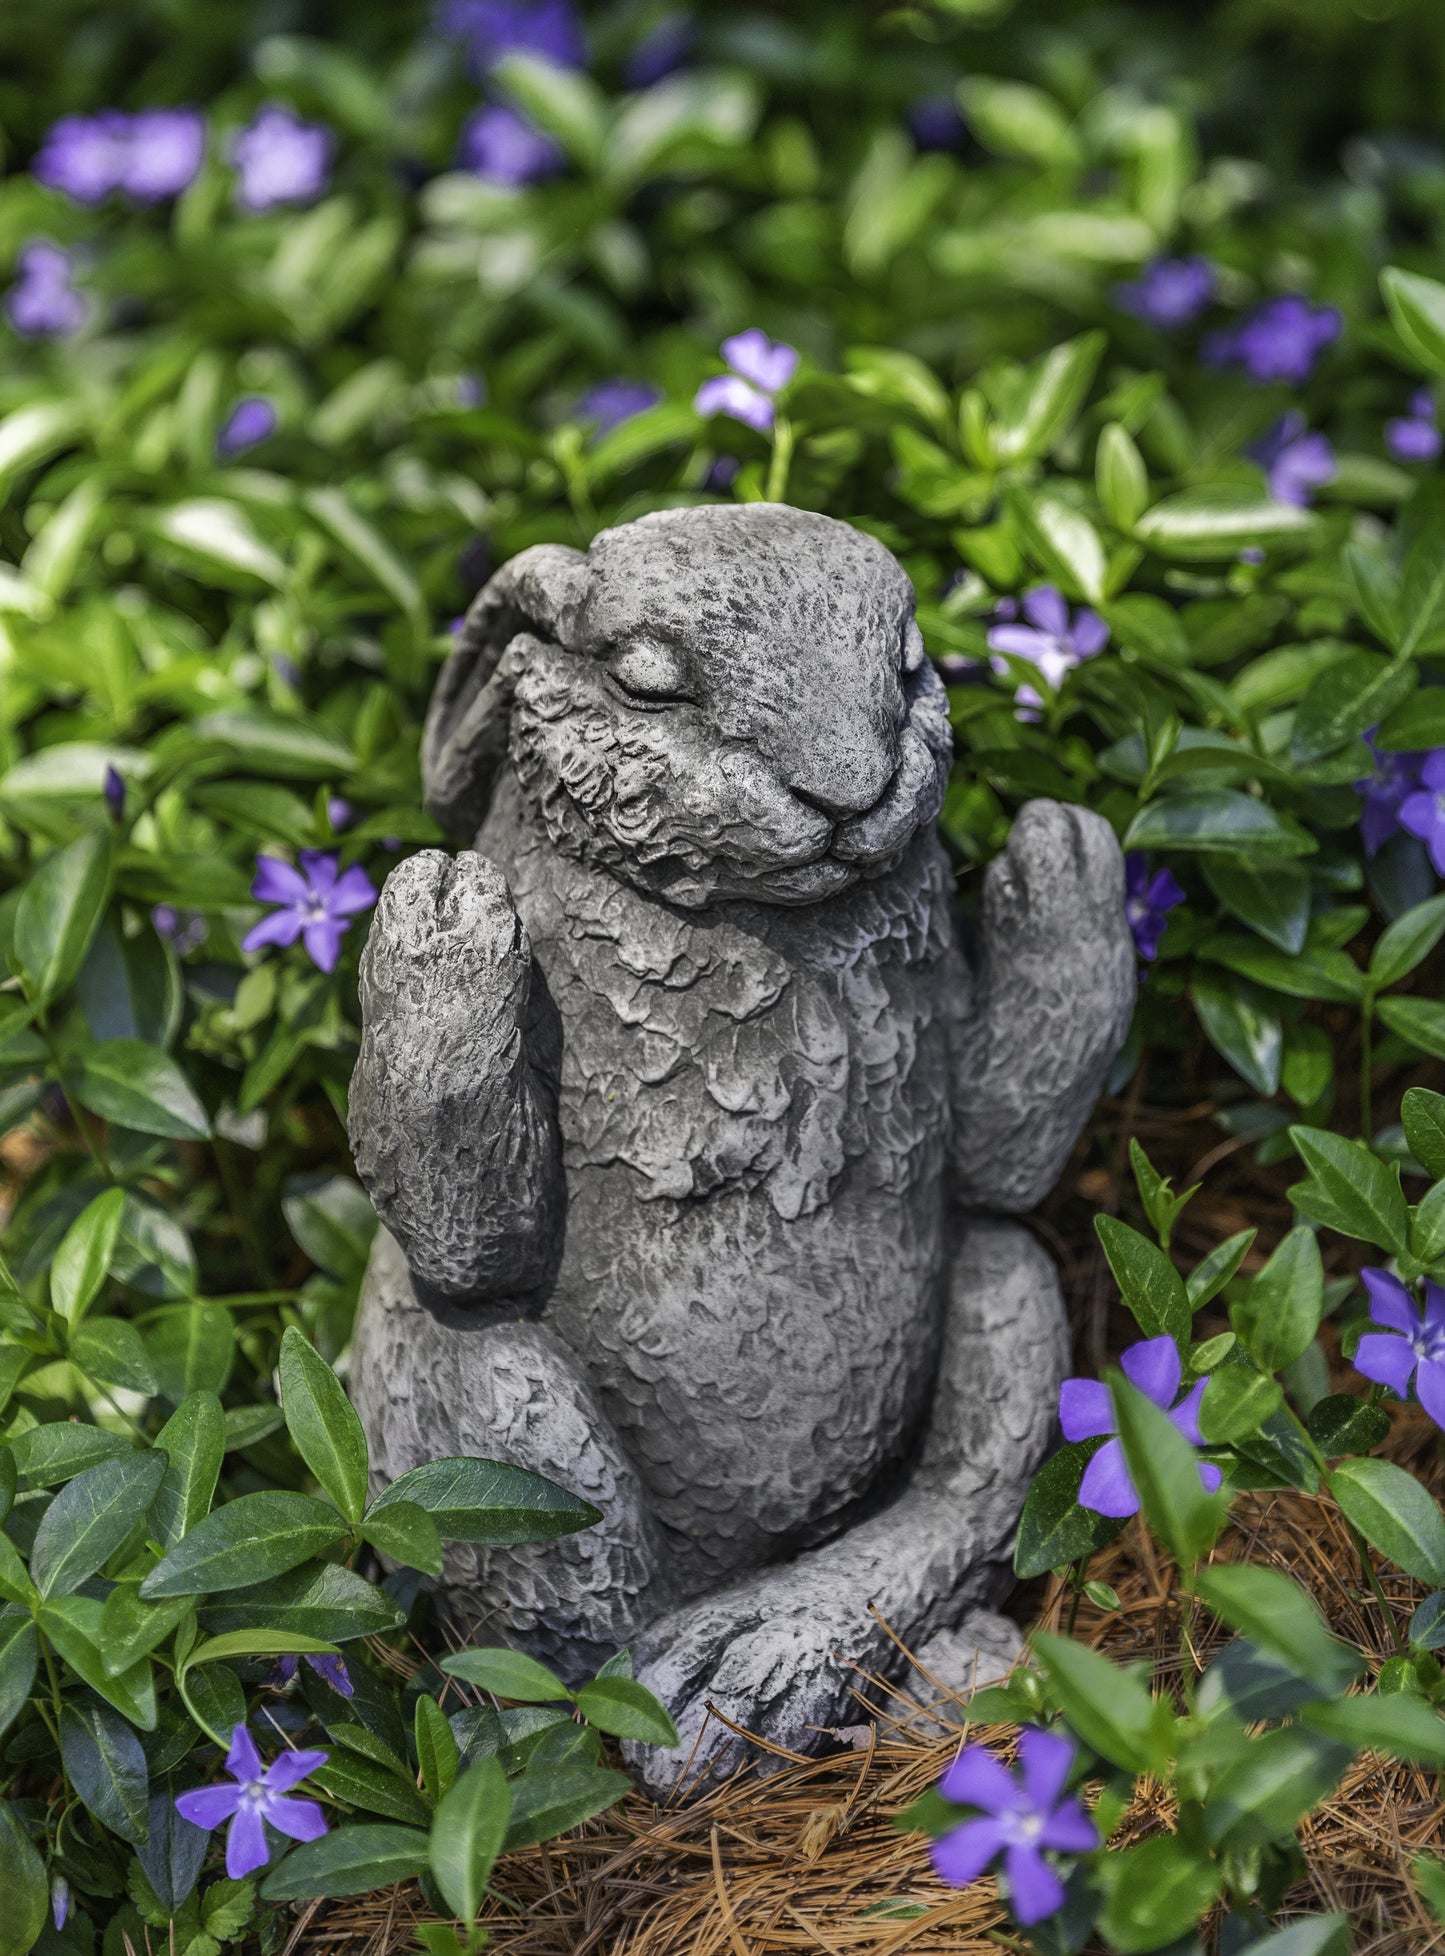 Meditating Rabbit Statue